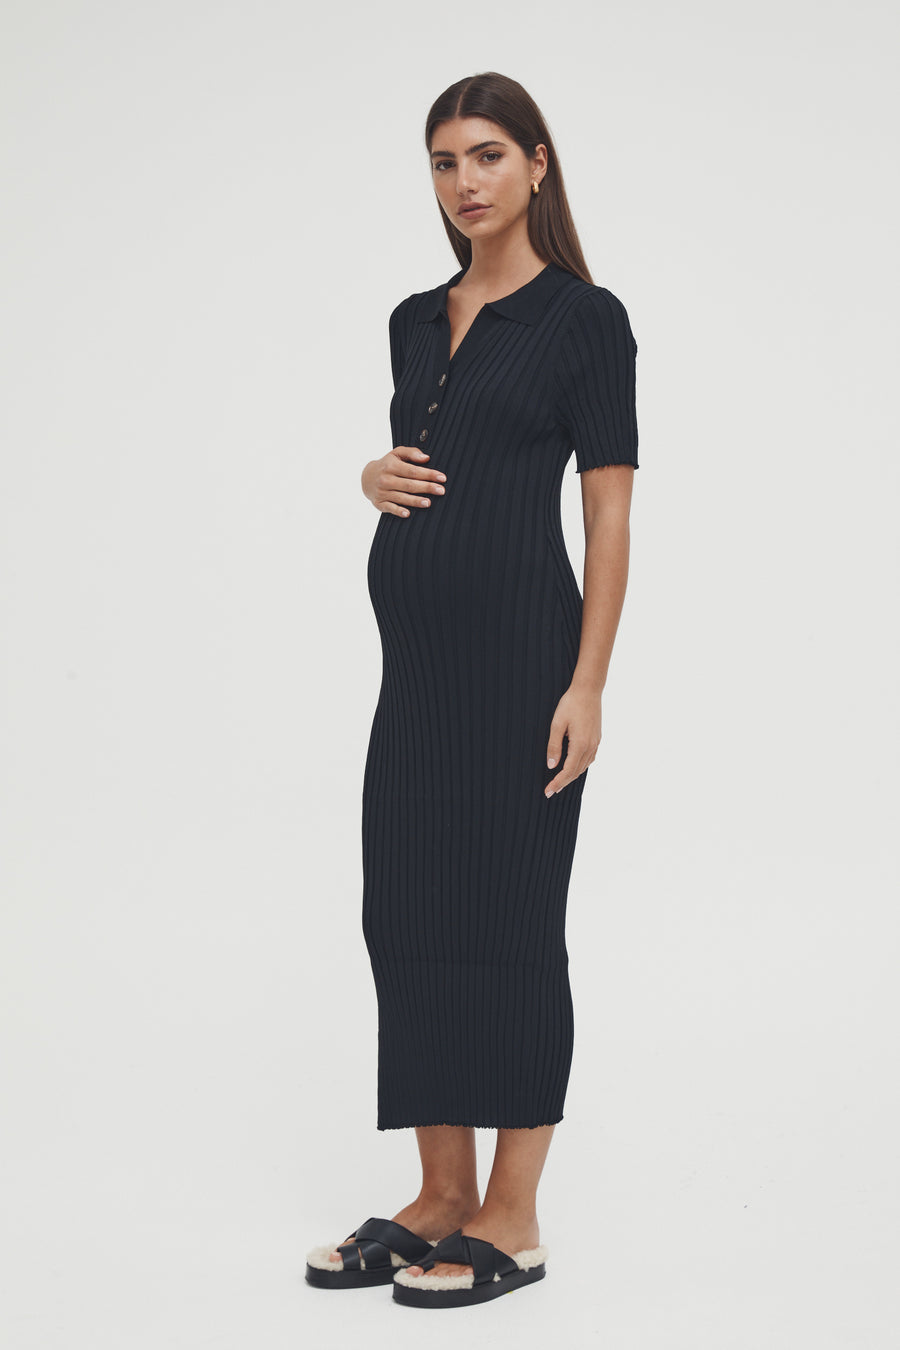 Black Tie Maternity Dress 5